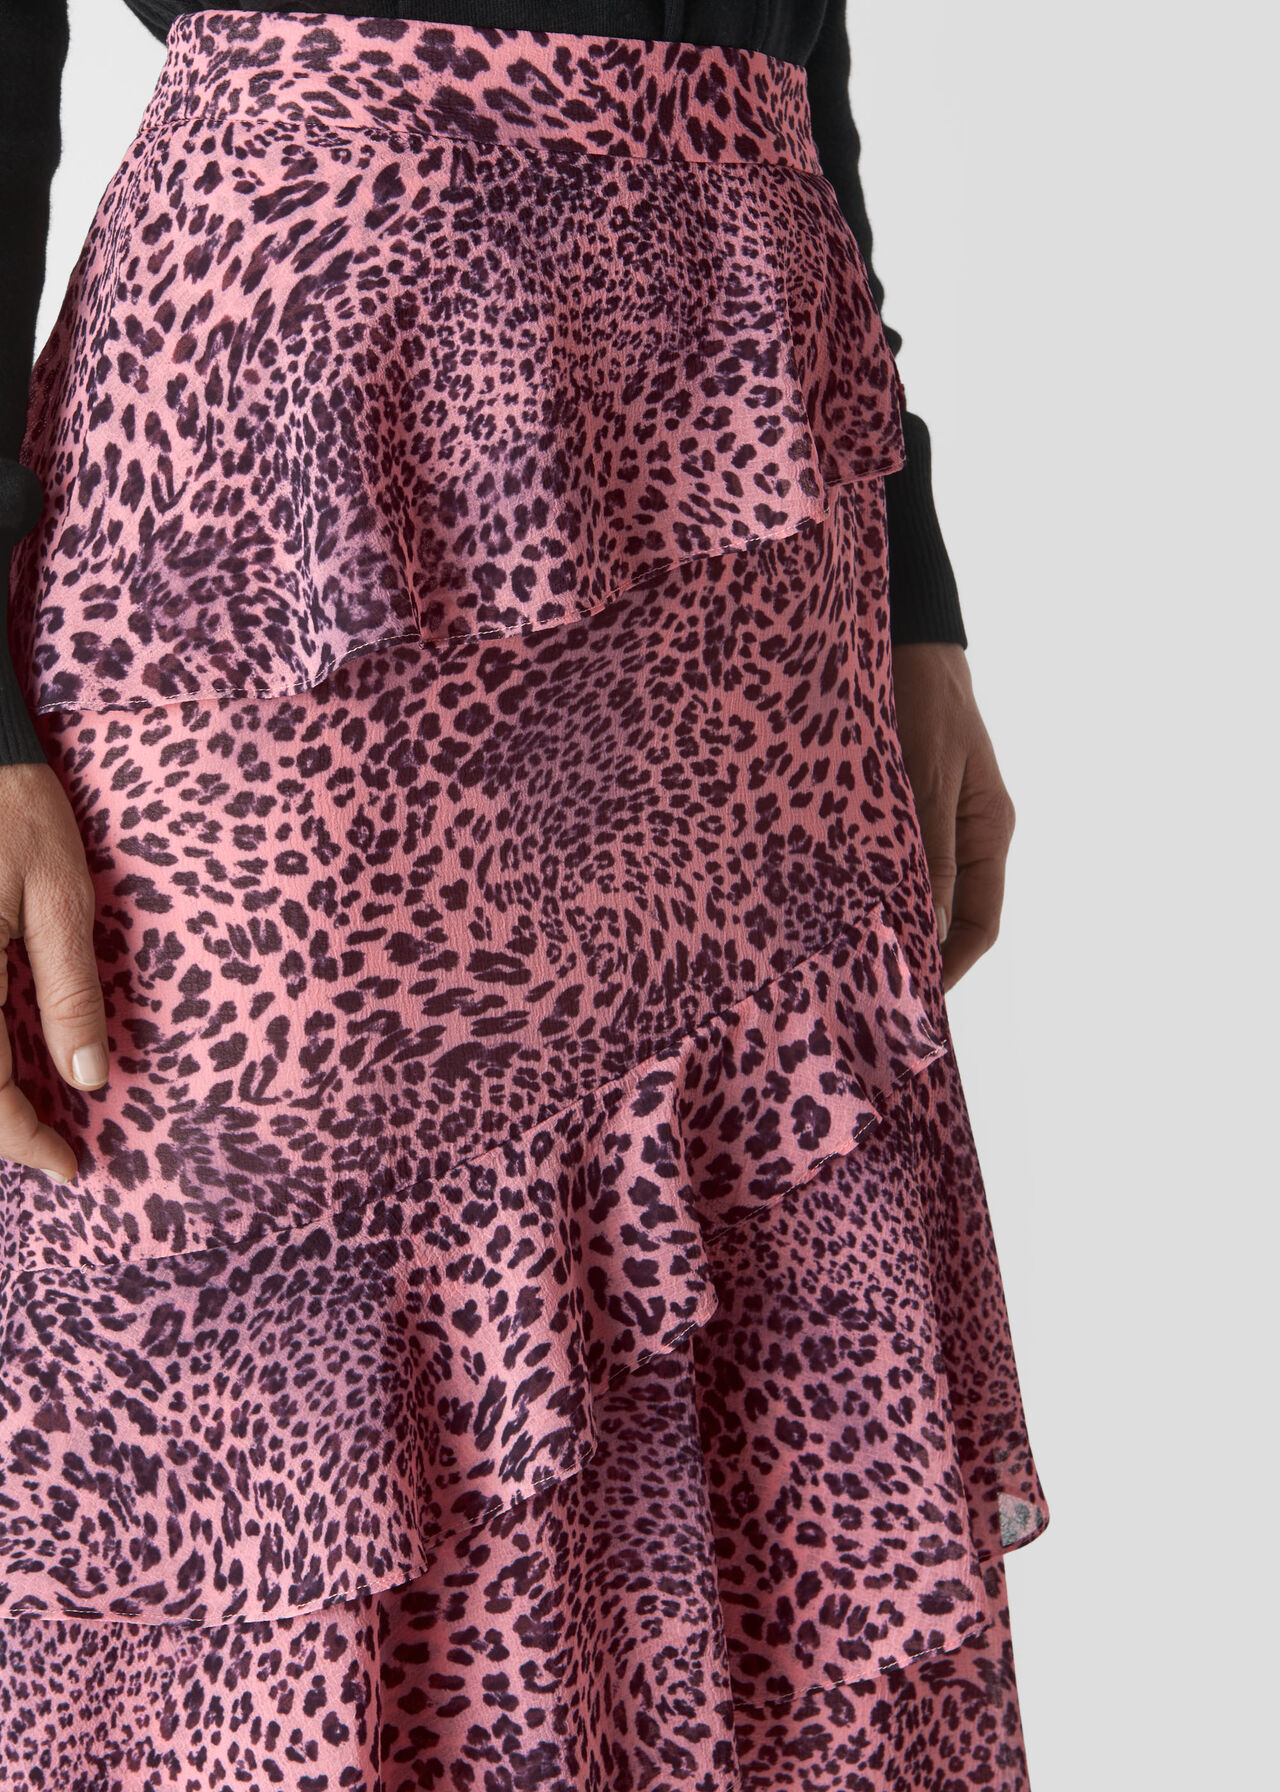 Wild Cat Print Skirt Pink/Multi